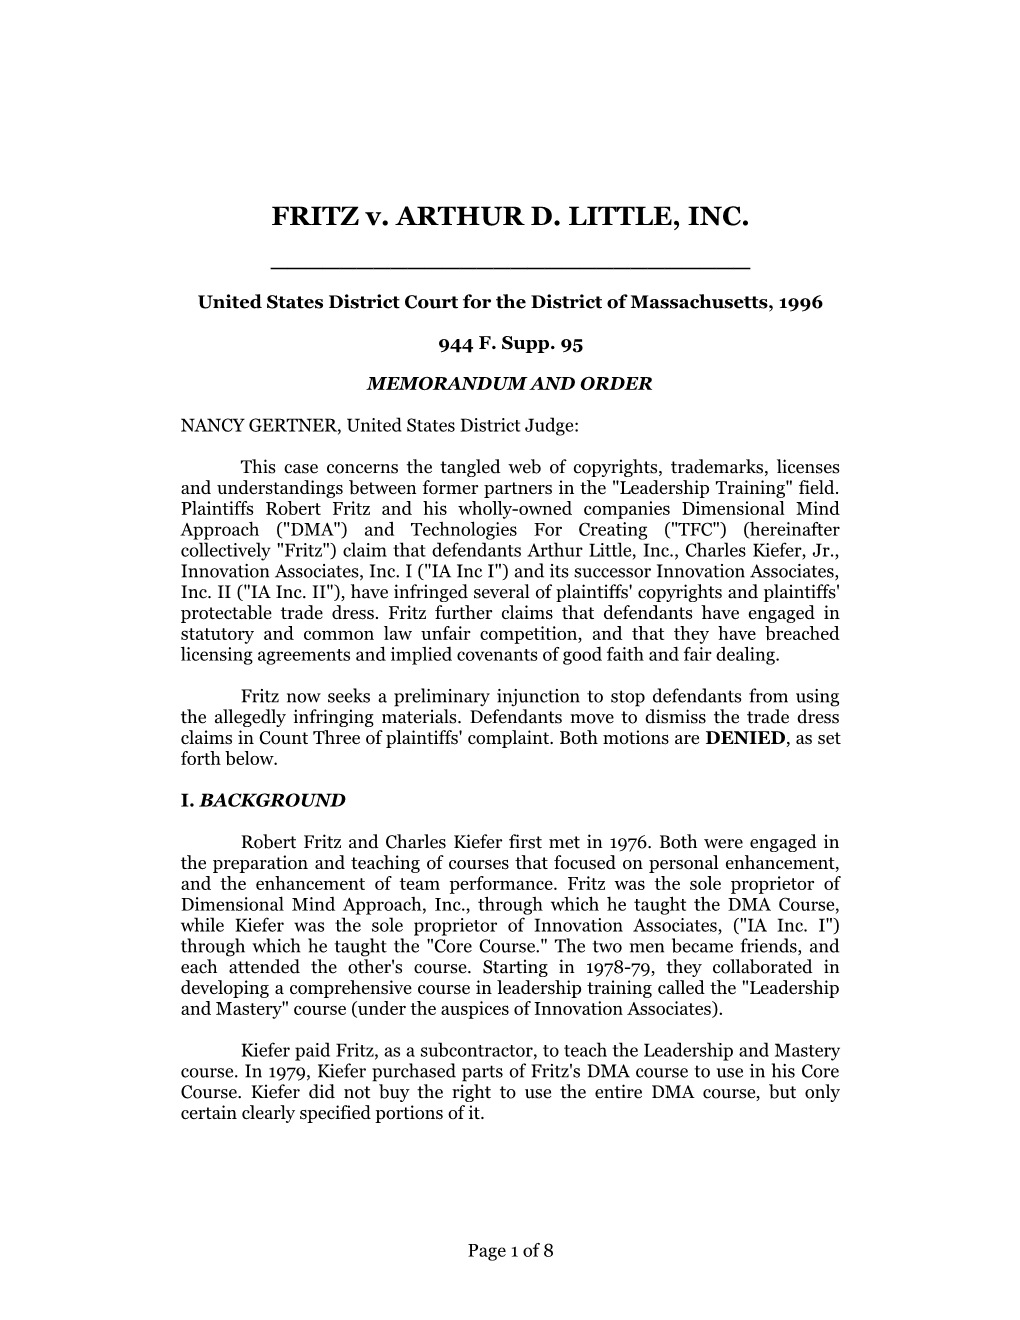 Fritz V. Arthur D. Little, 944 F. Supp. 95 (1996)